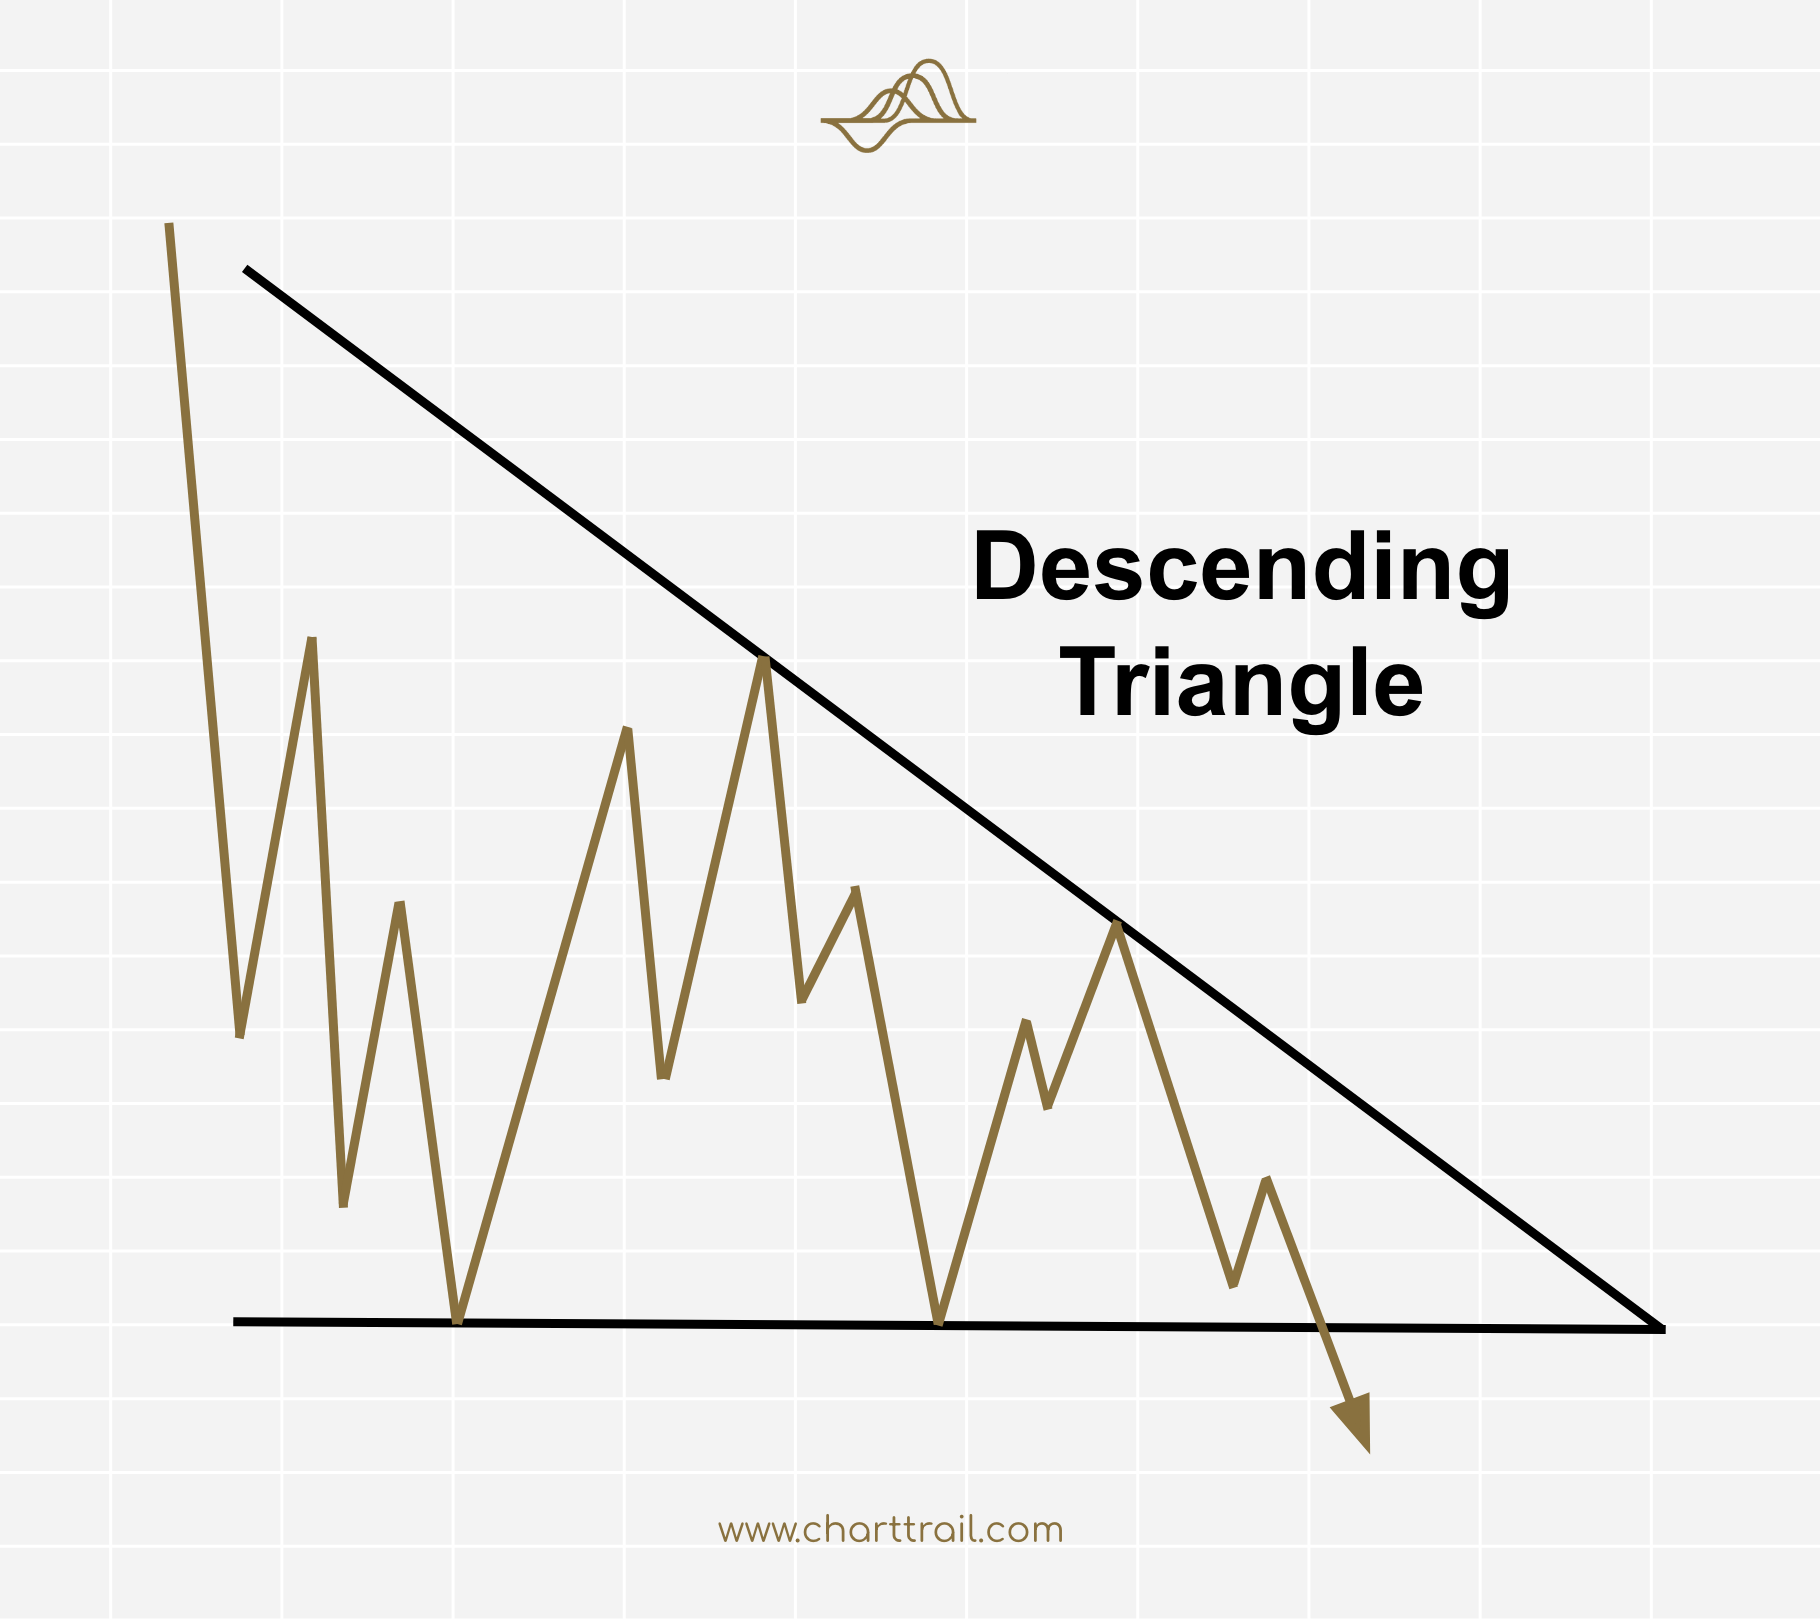 Descending Triangle คือ